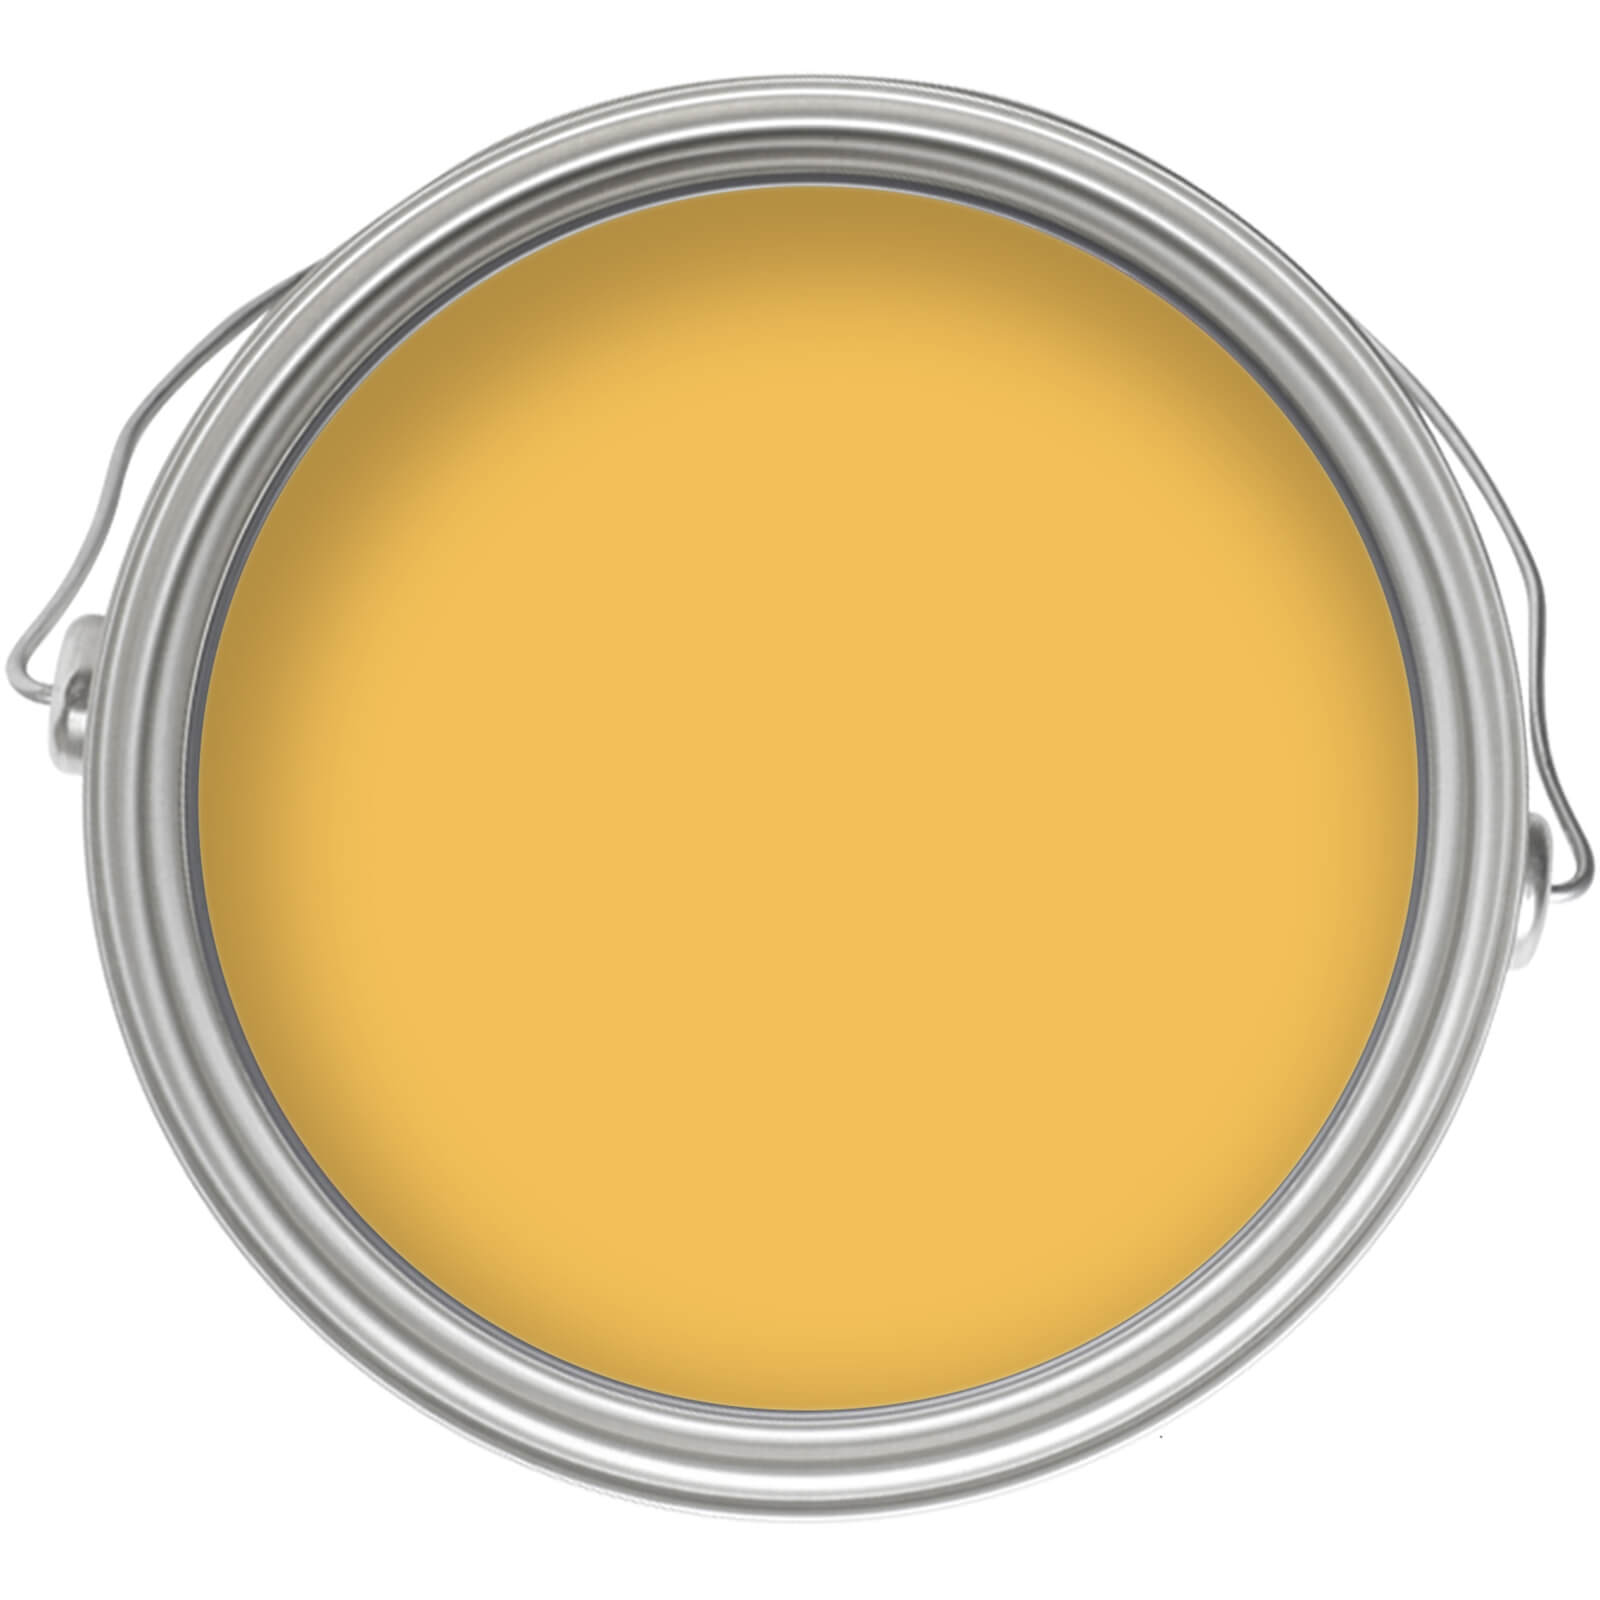 Homebase Matt Emulsion Paint Yellow Brick Road - Tester 90ml